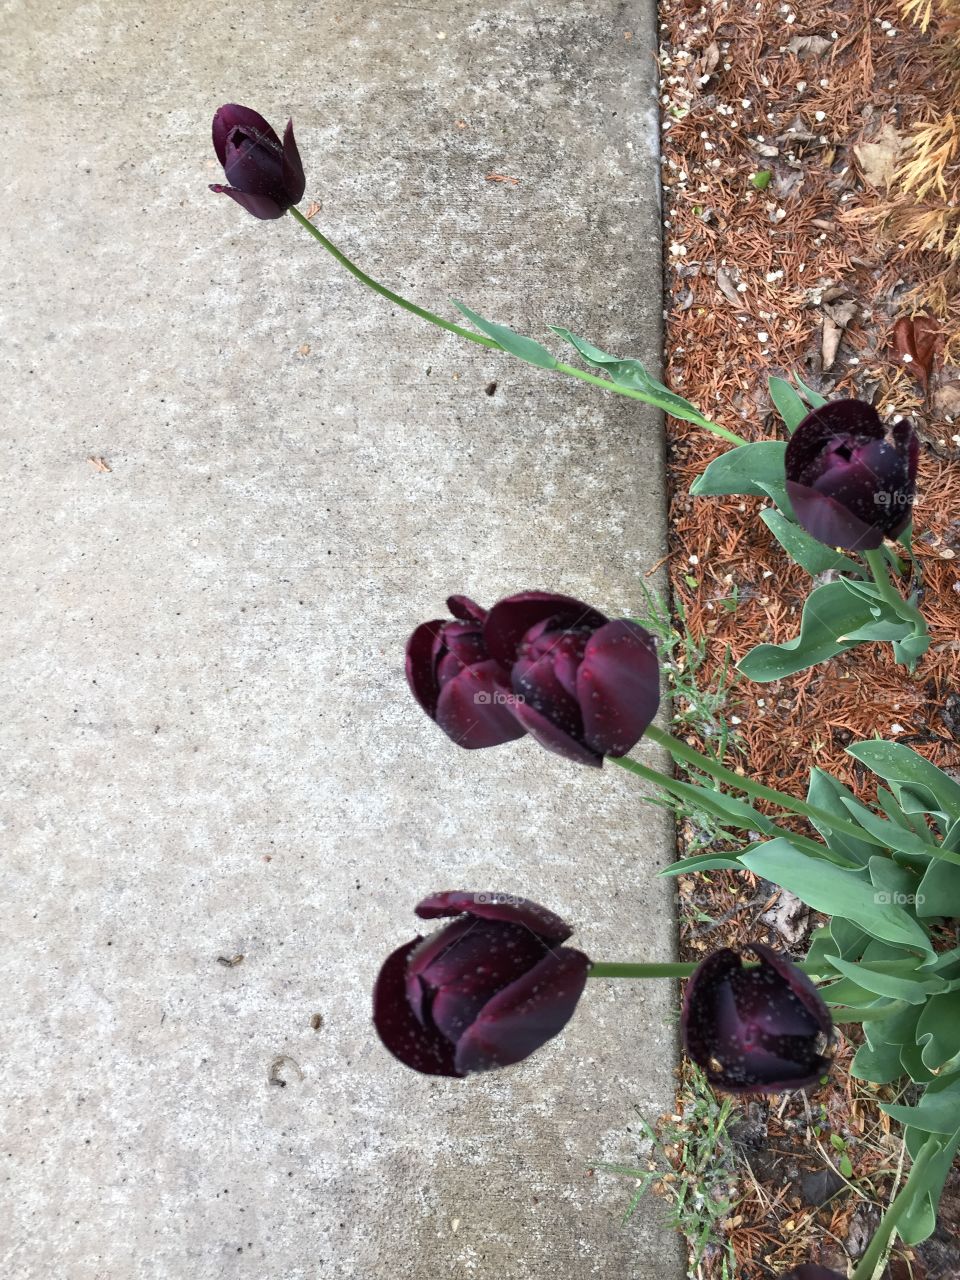 Spring Rain on my Tulips 💐